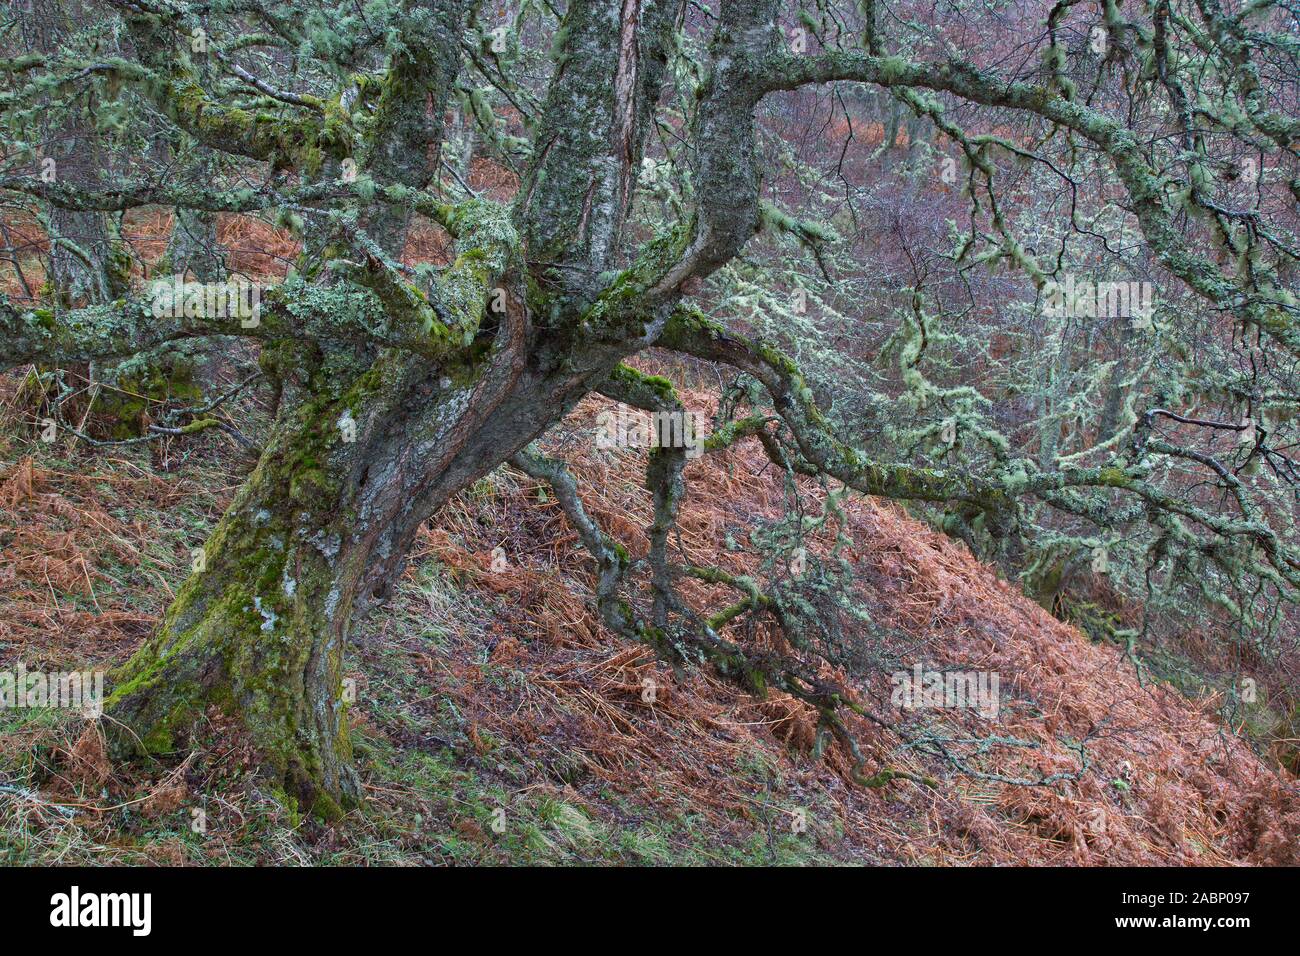 Silver birch / warty birch / European white birch (Betula pendula / Betula verucosa) tree covered in old man's beard lichens (Usnea species) in winter Stock Photo